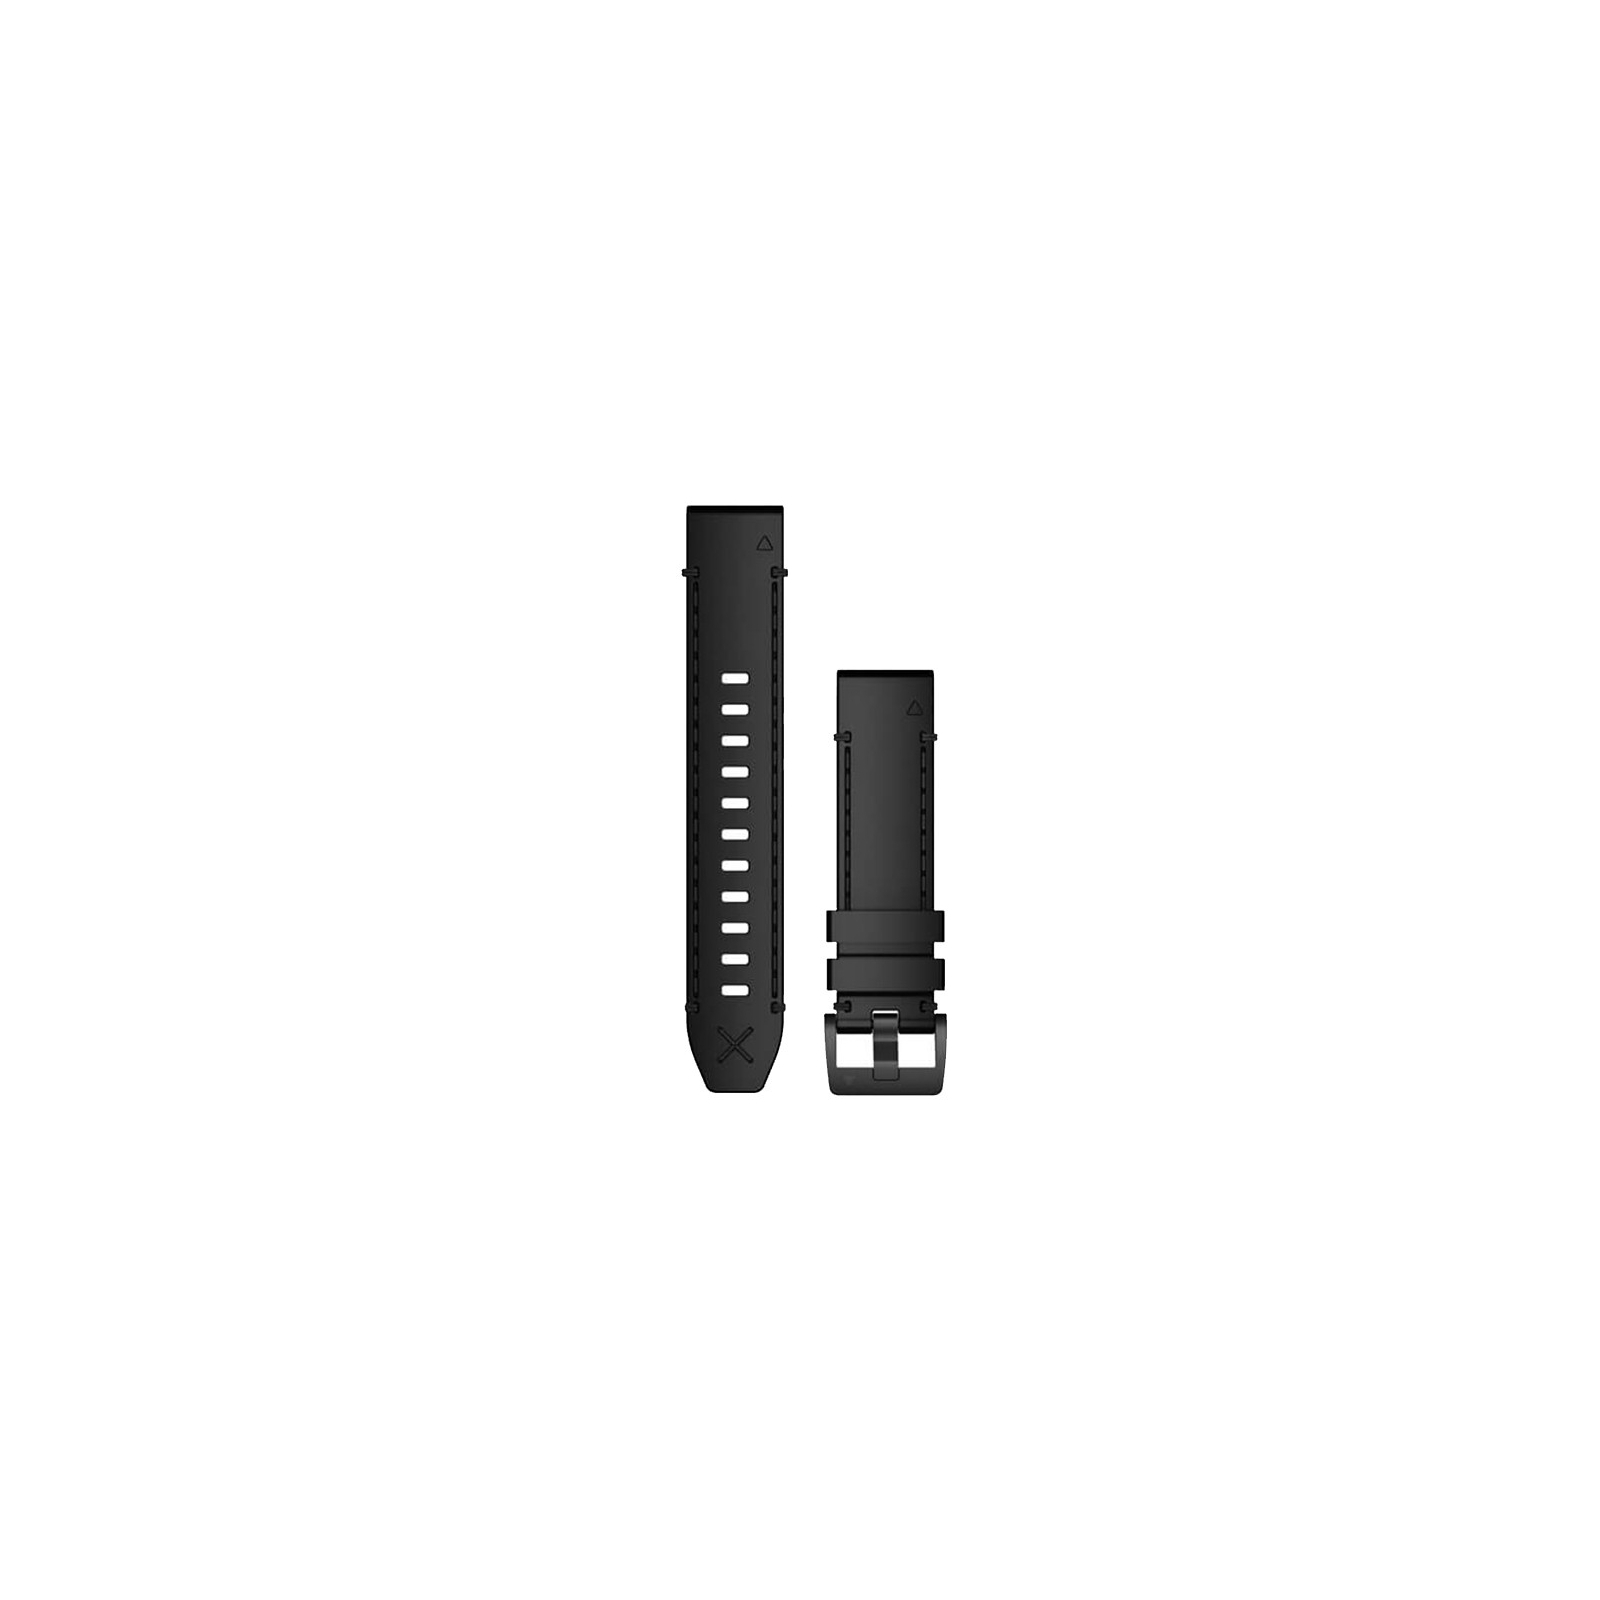 Ремешок для смарт-часов Garmin MARQ, QuickFit 22m, Black Leather Strap (010-12738-19)